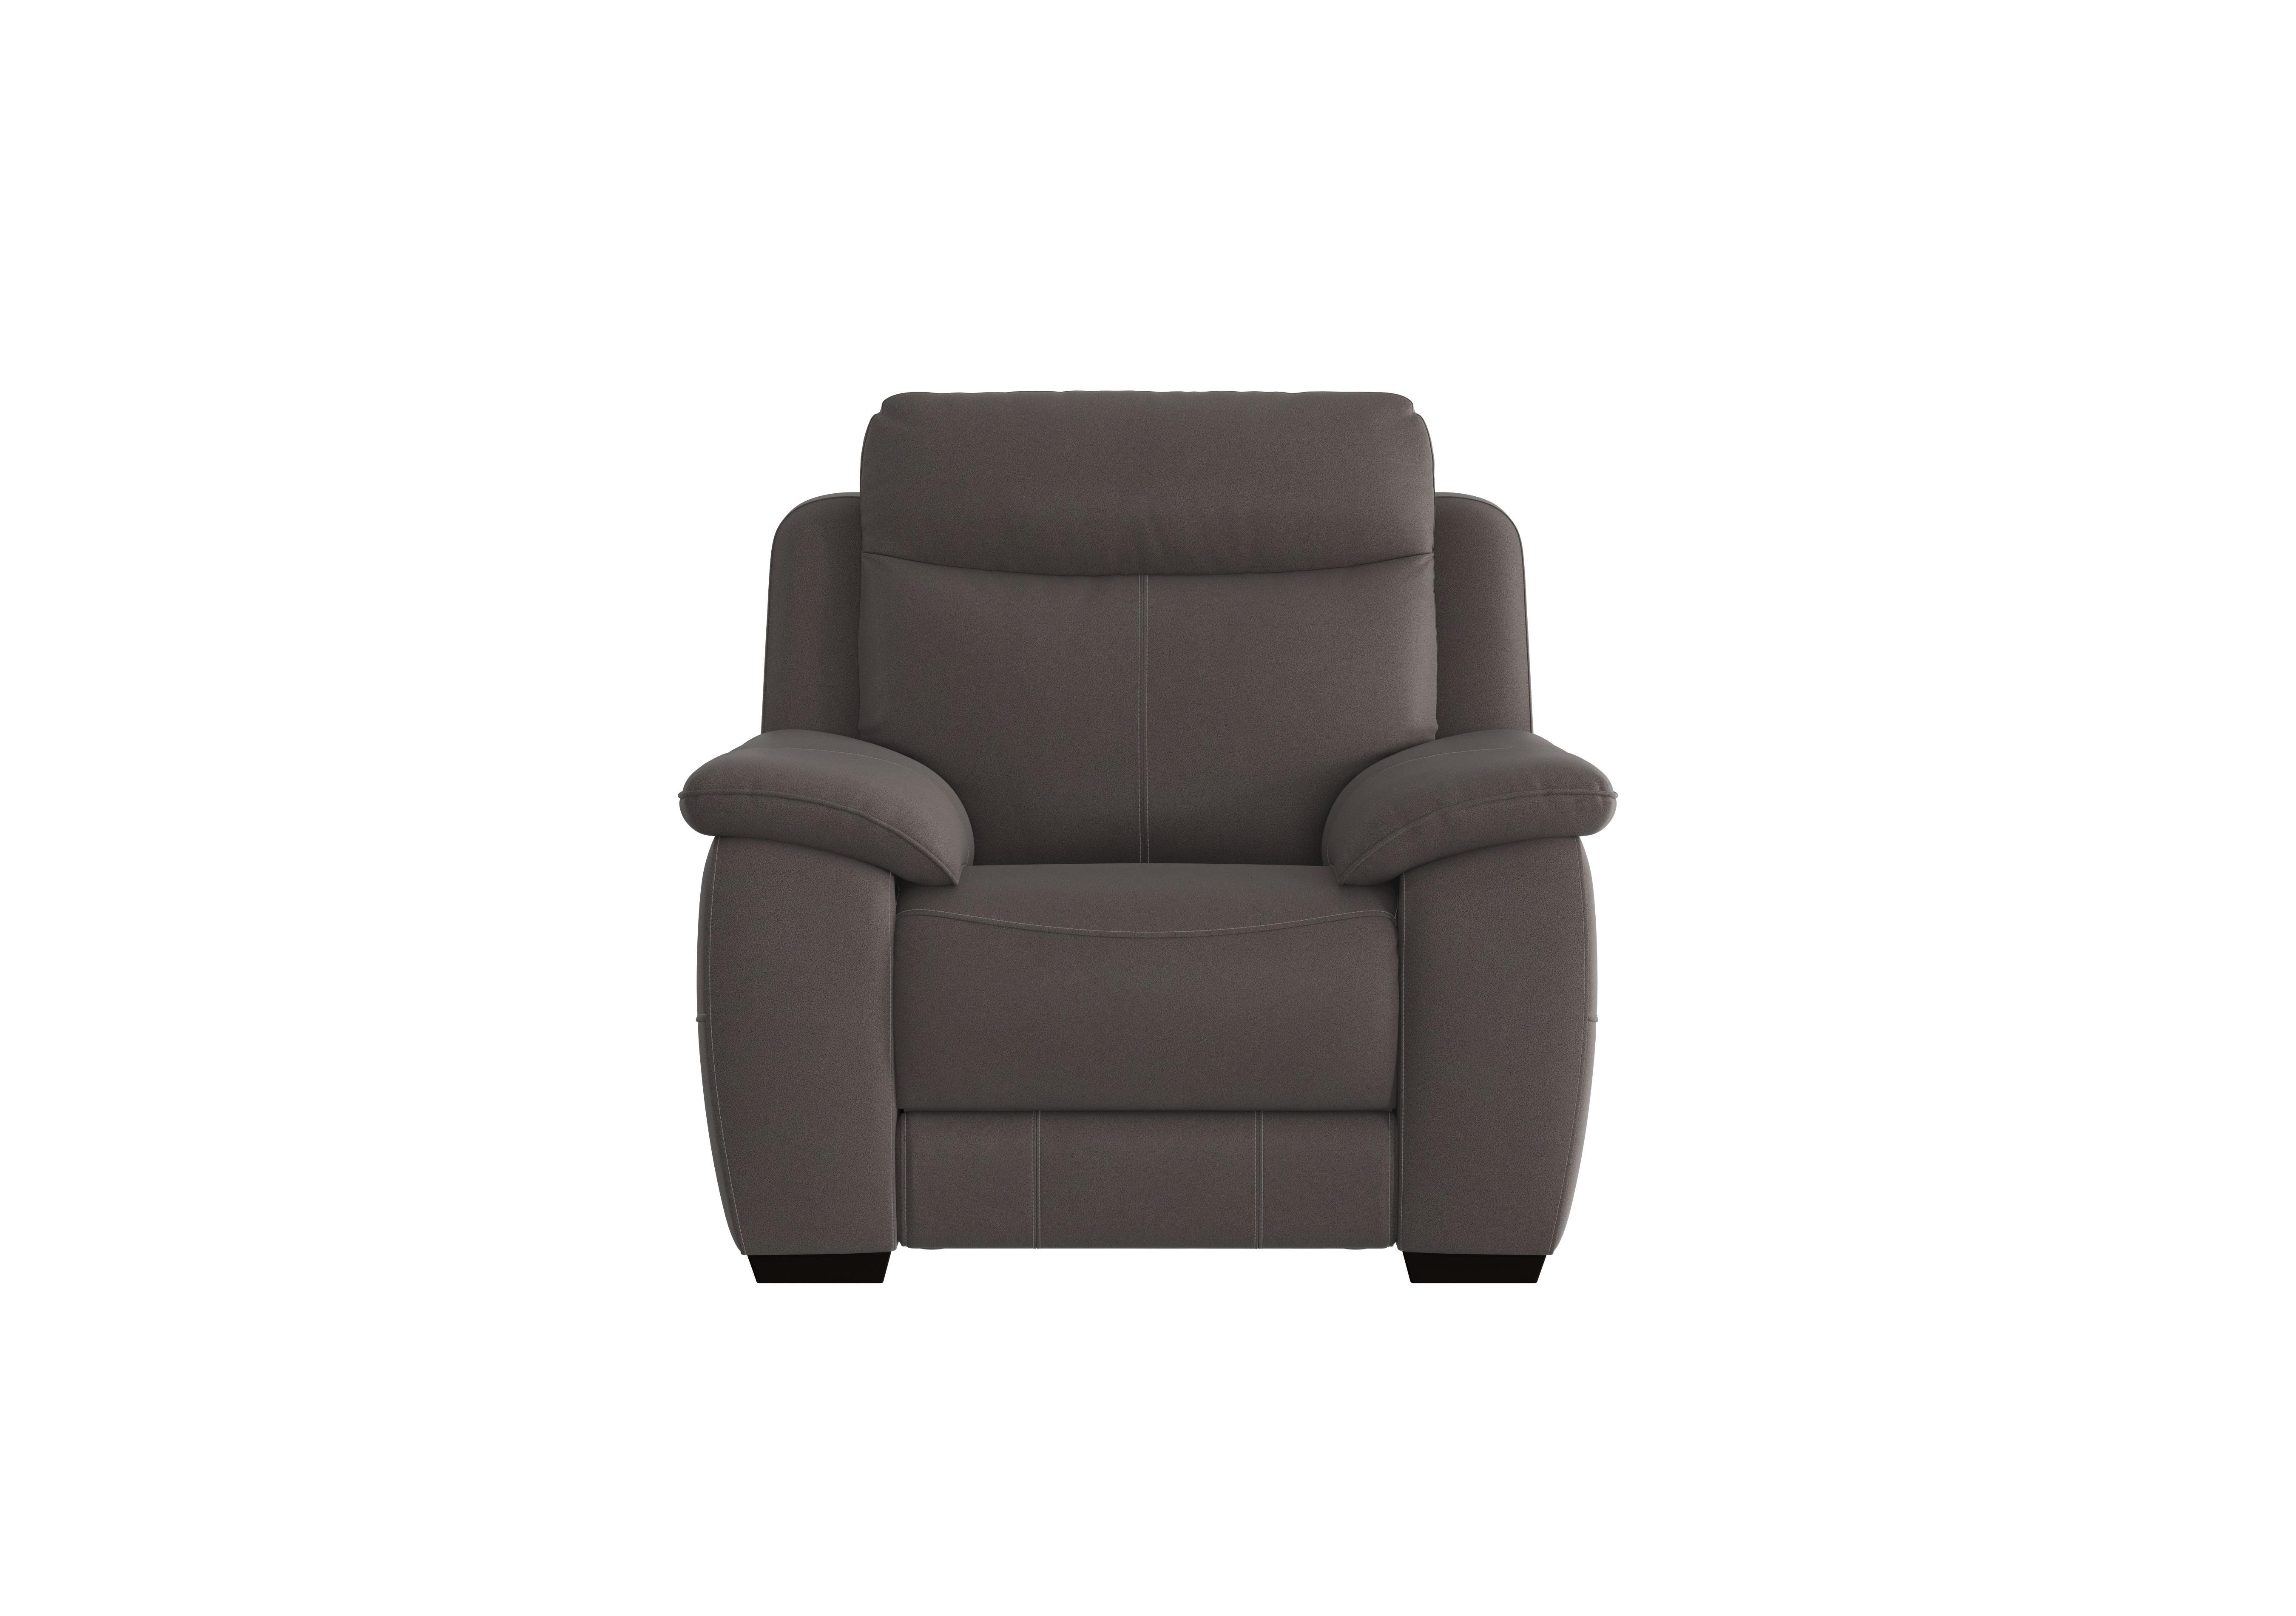 Starlight Express Fabric Armchair in Bfa-Blj-R16 Grey on Furniture Village